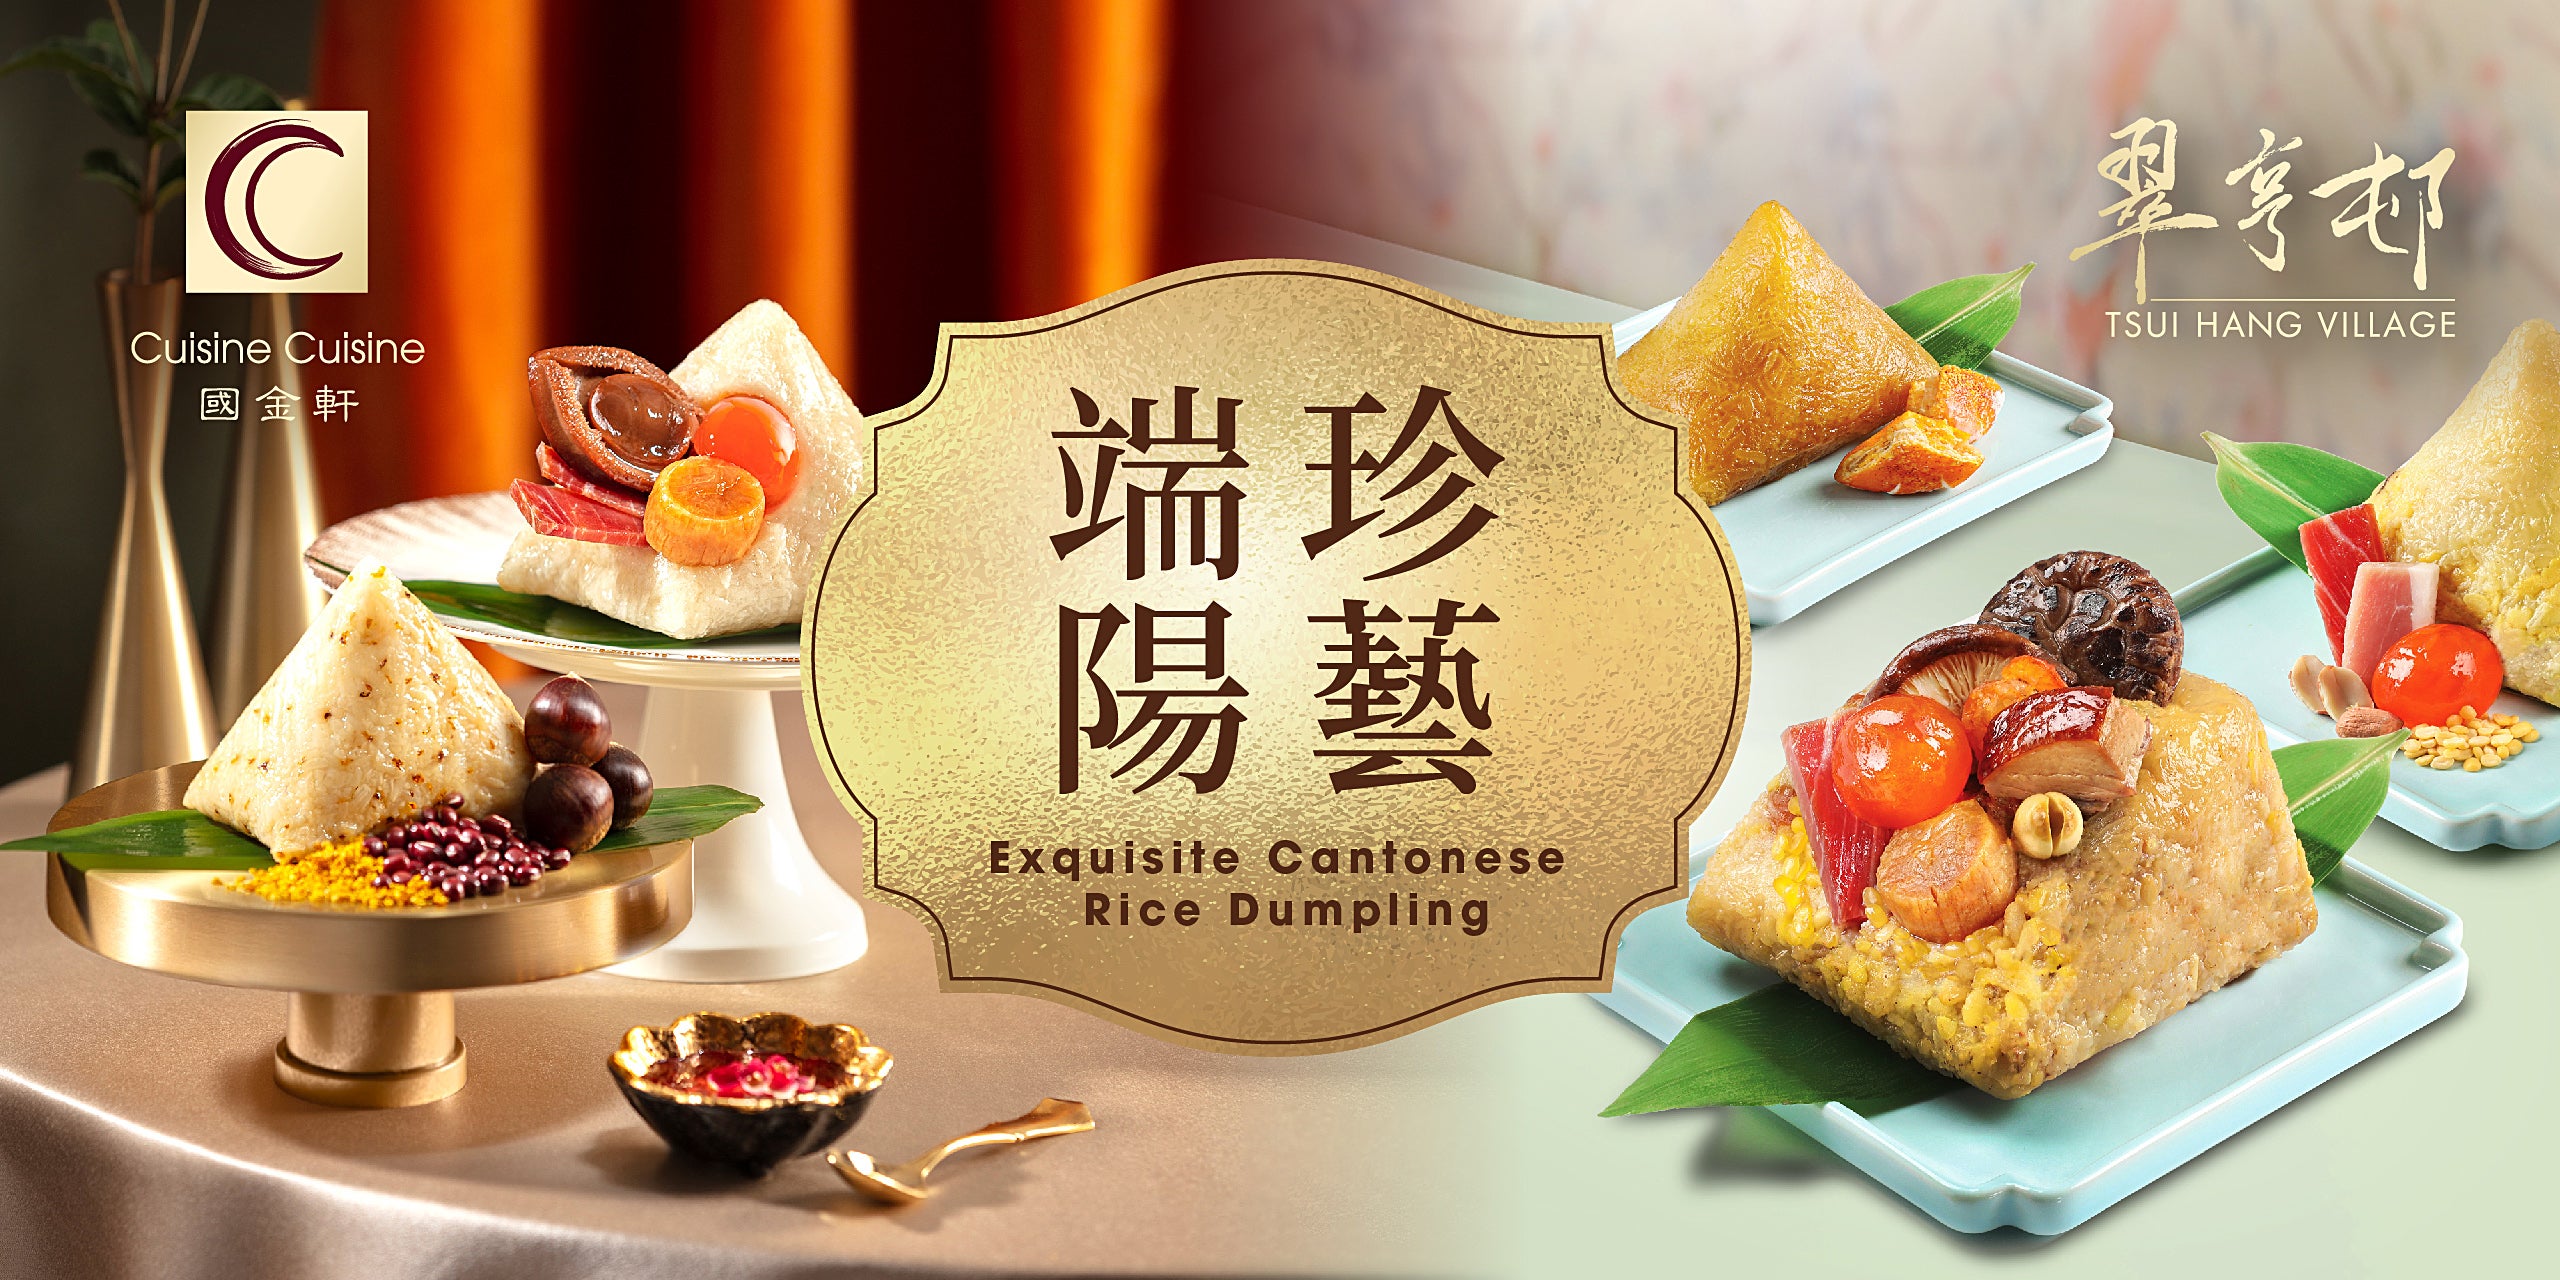 Up to 35% Savings on Cuisine Cuisine & Tsui Hang Village’s Rice Dumplings 